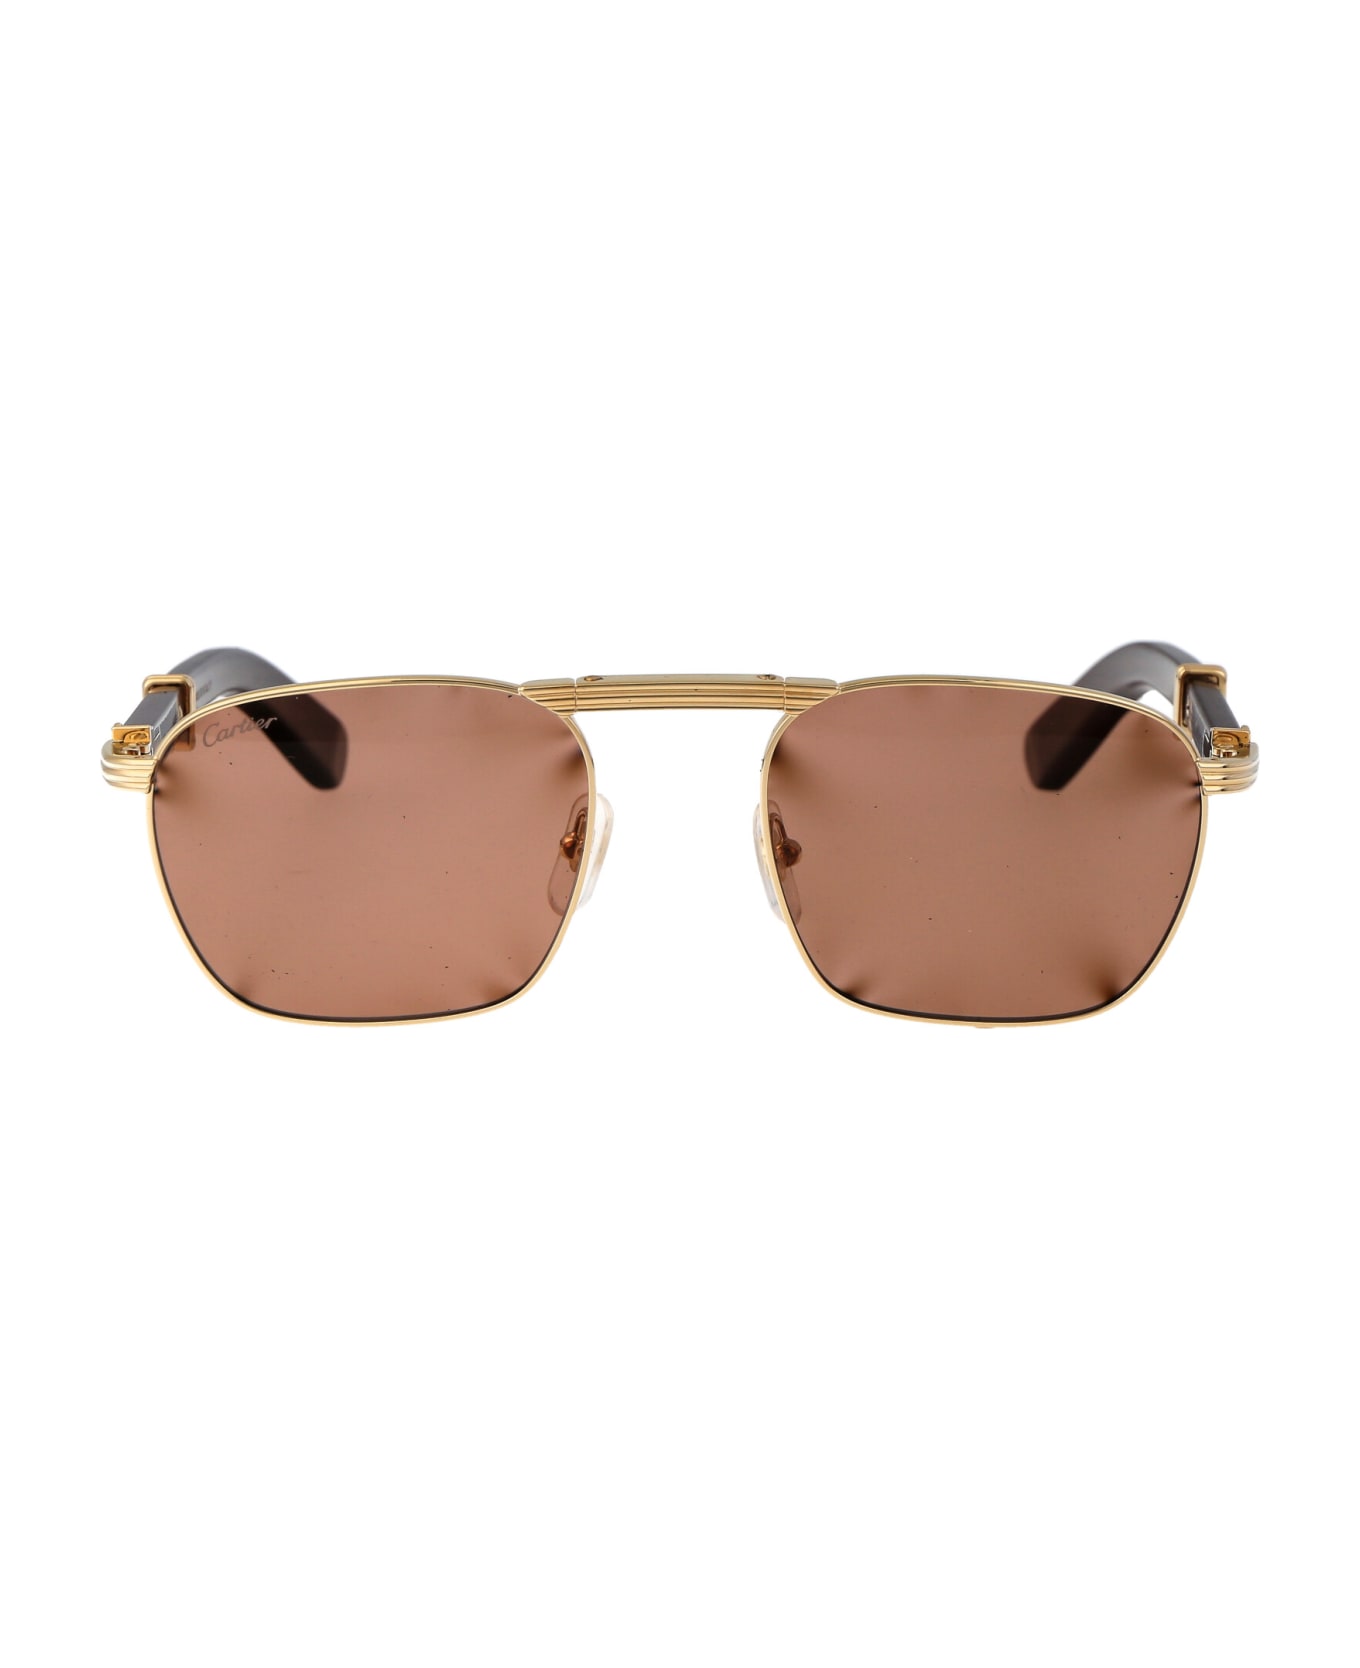 Cartier Eyewear Ct0428s Sunglasses - 001 GOLD BURGUNDY BROWN